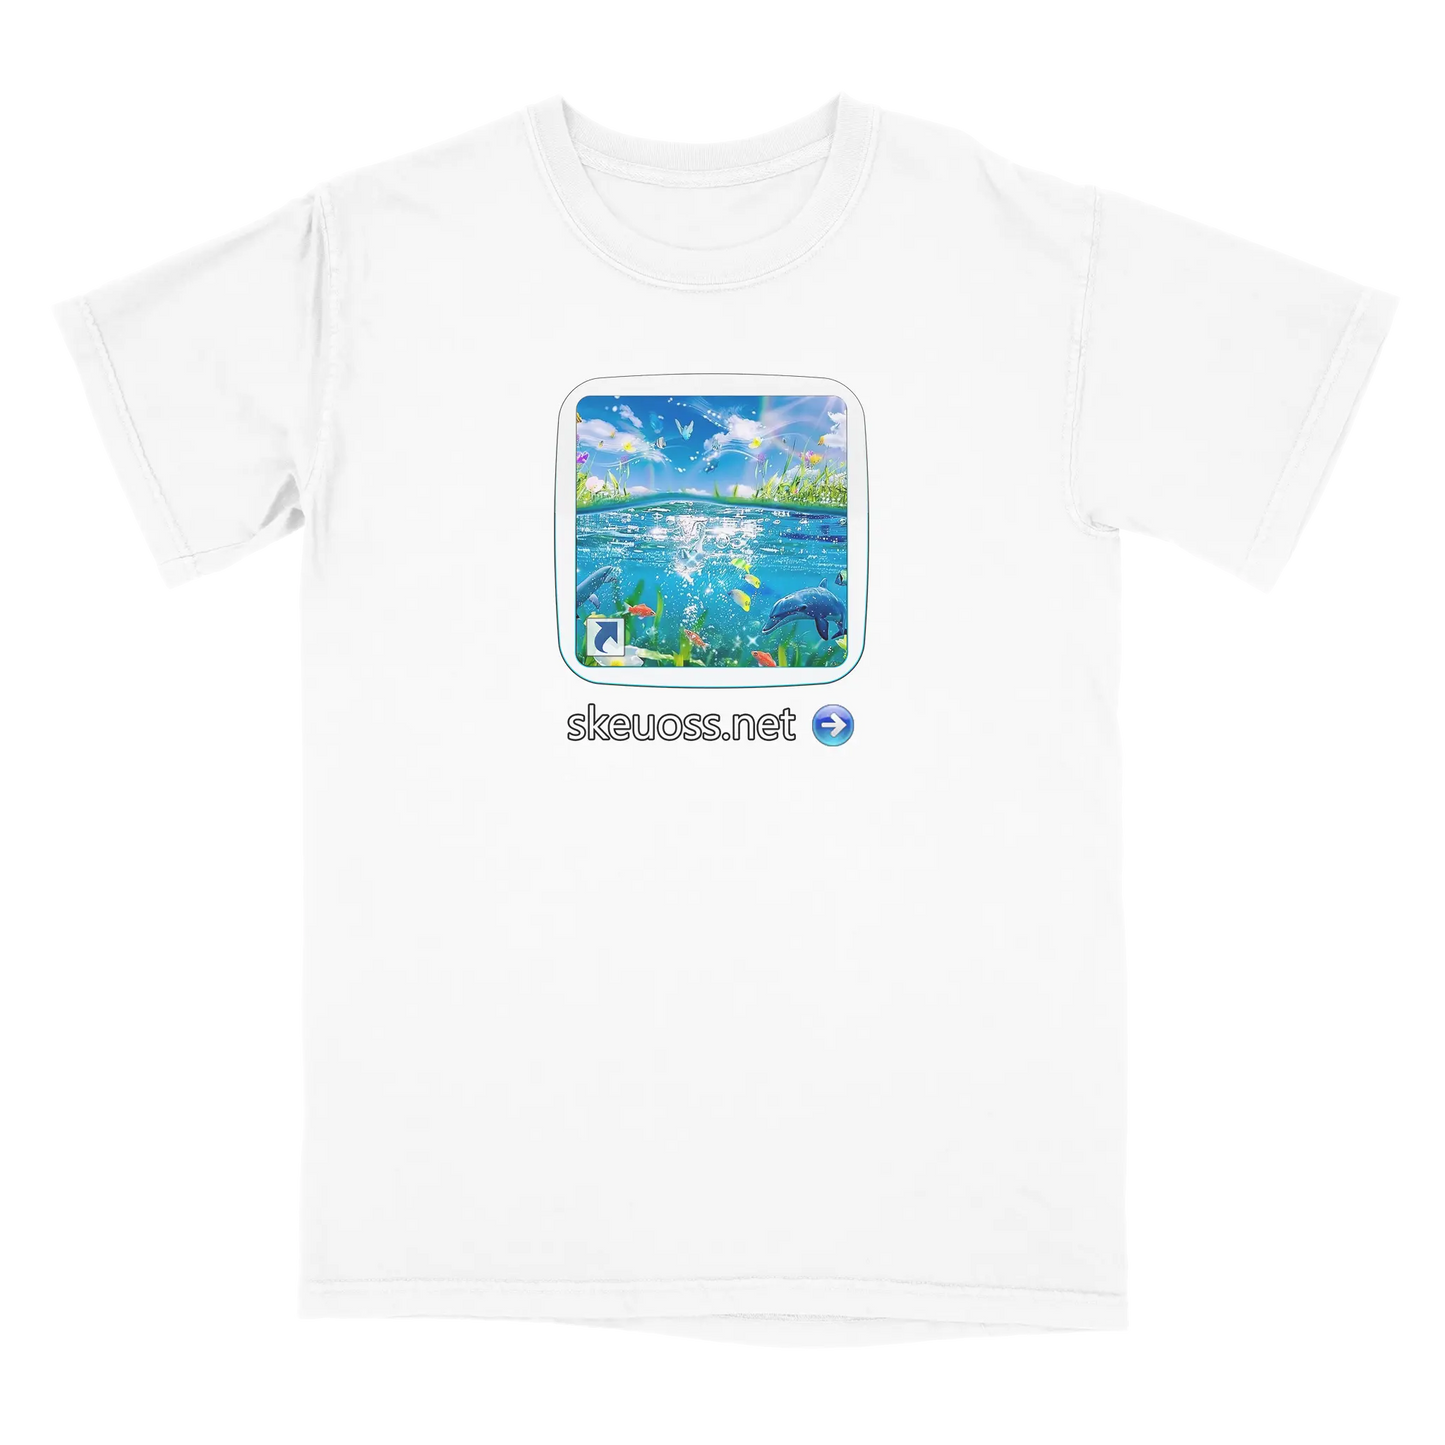 Frutiger Aero T-shirt - User Login Collection - User 200